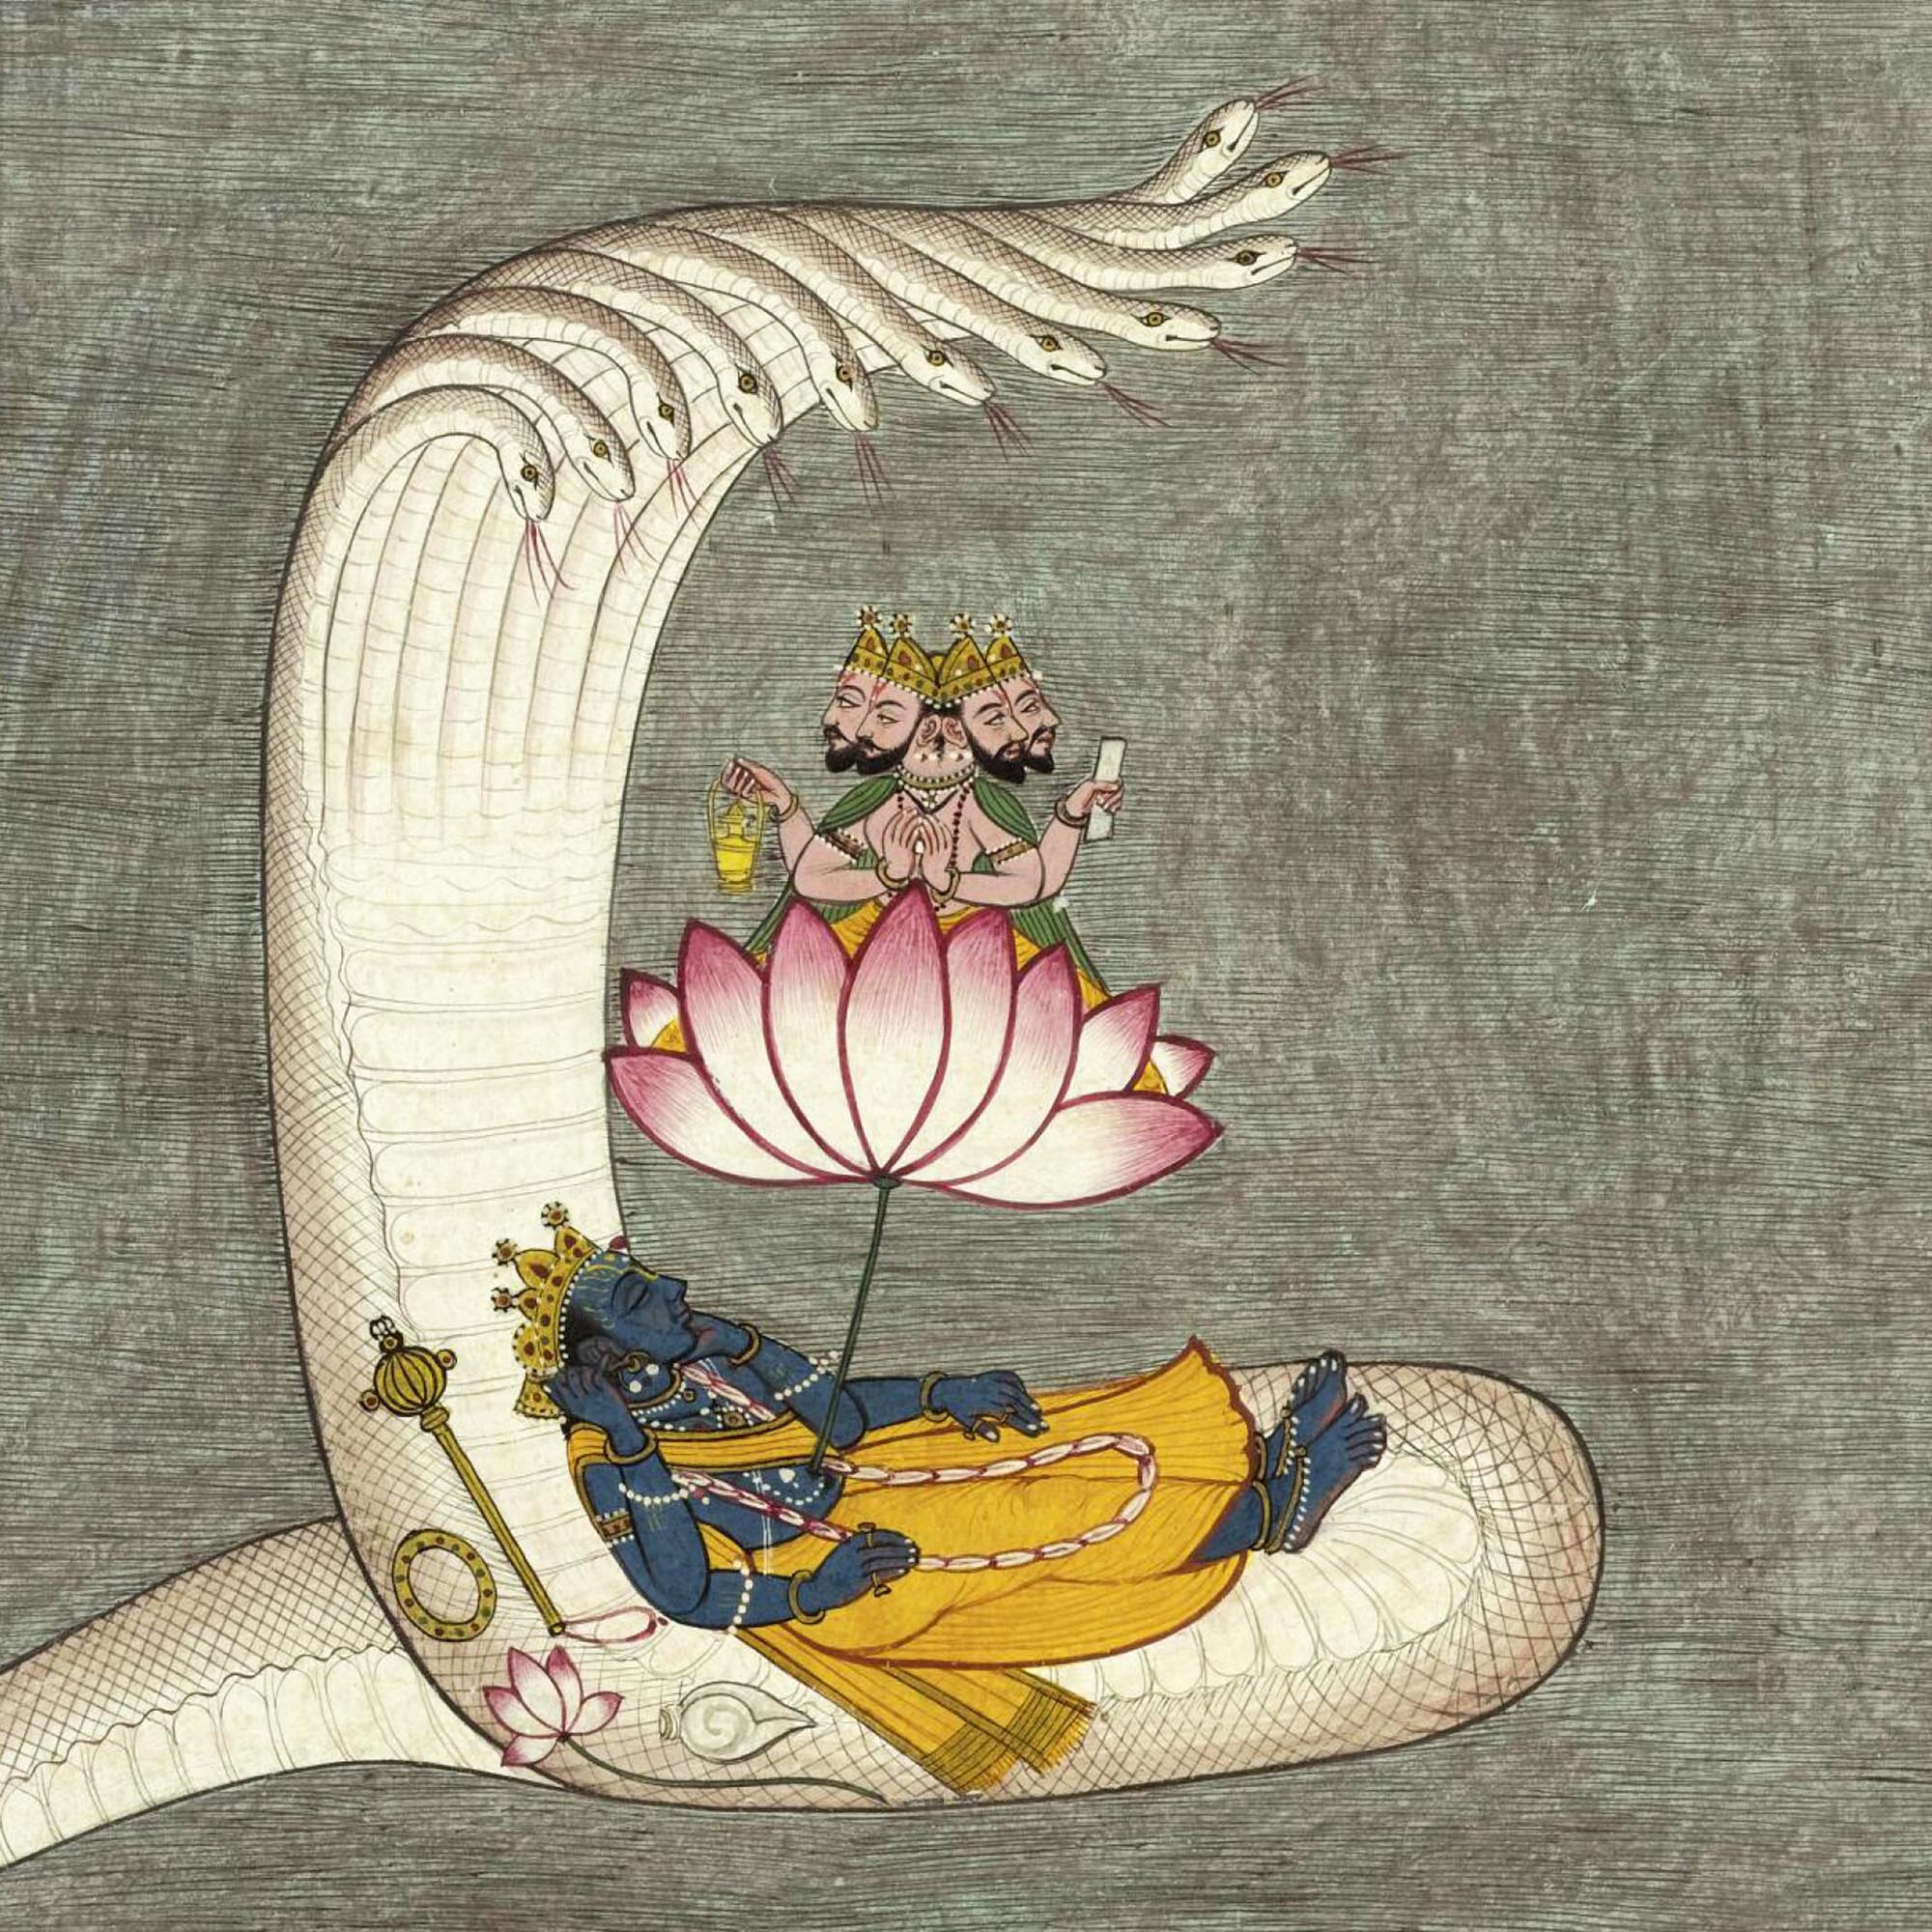 giclee A5 Landscape Antique Vishnu, Brahma, Naga, Cosmic Universe Creation Hindu Yoga Yogic Vedic Cosmology Lotus Serpent Fine Art Print